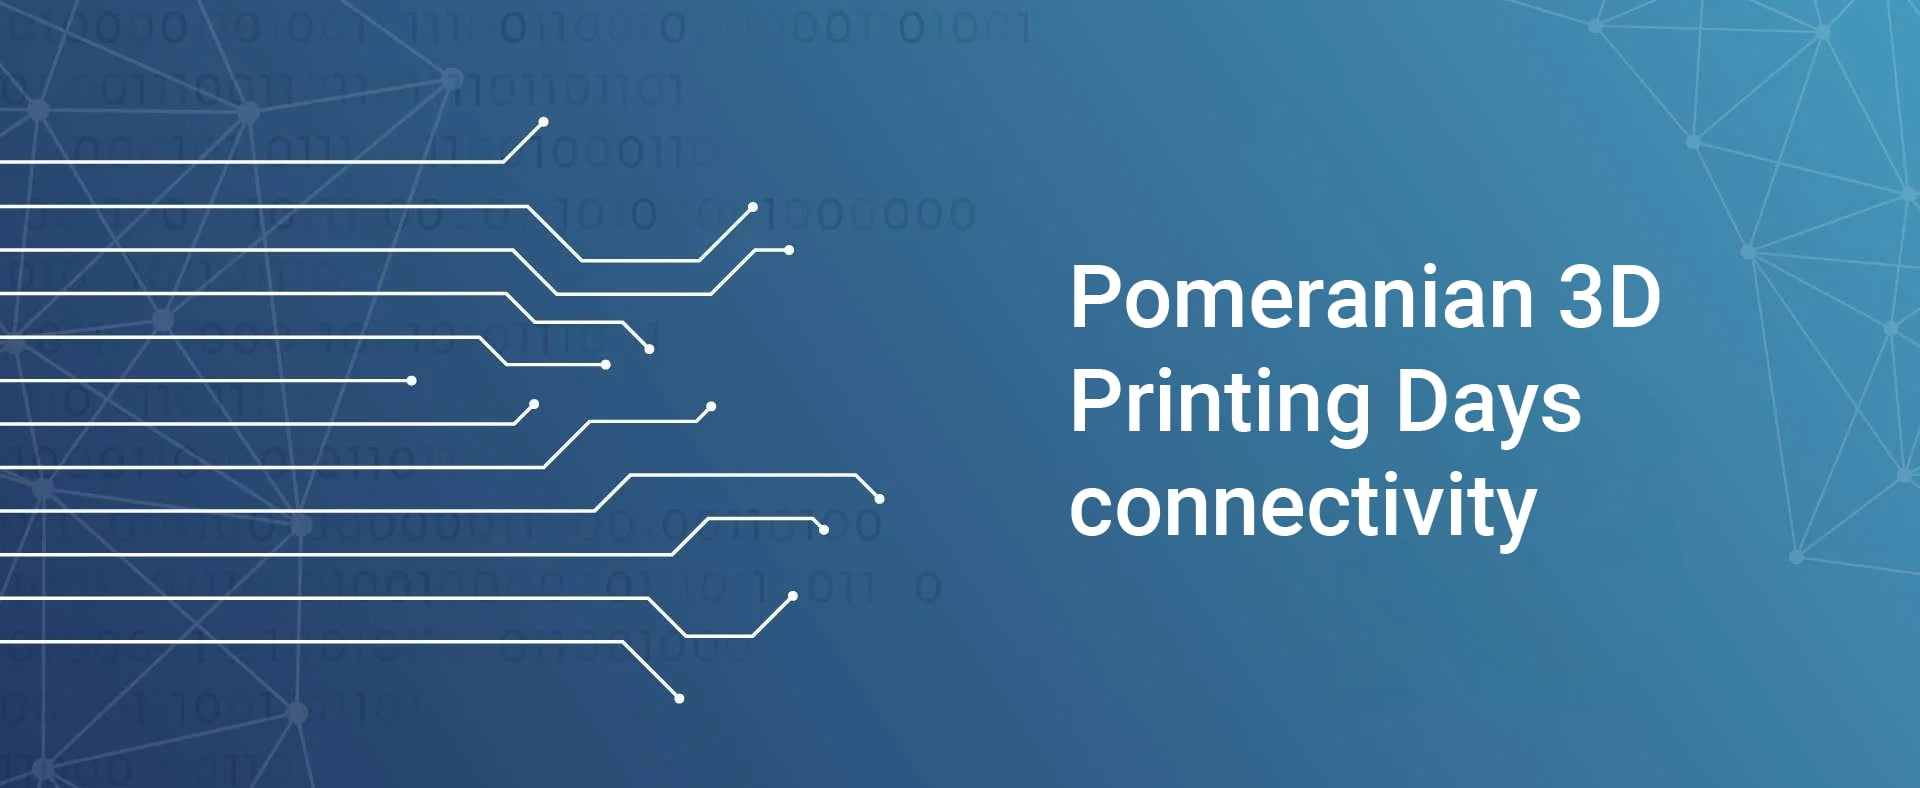 Pomeranian 3D Printing Days connectivity